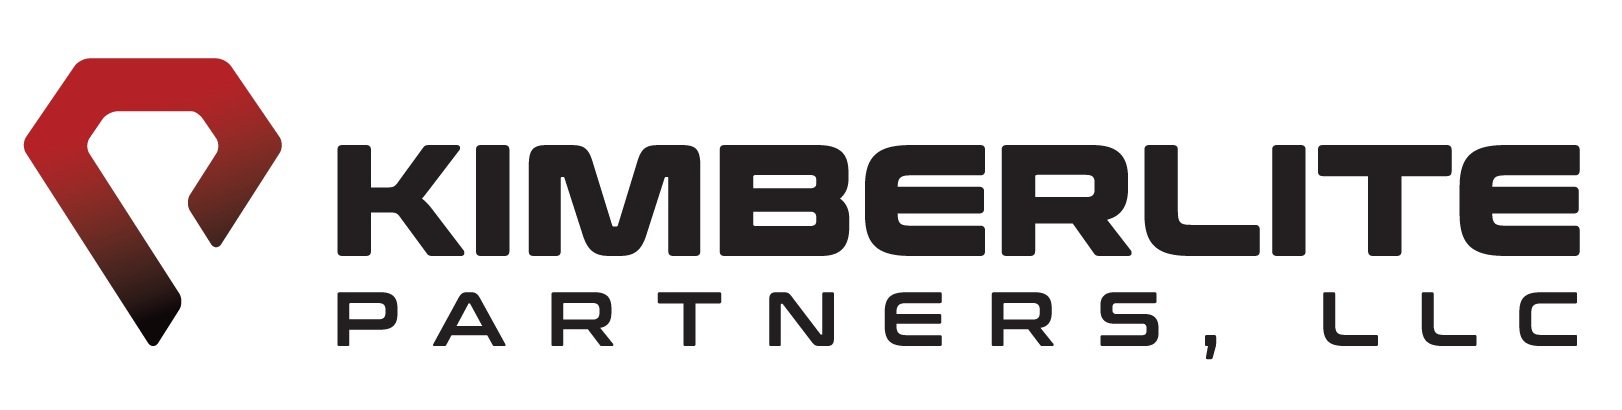 Kimberlite Partners